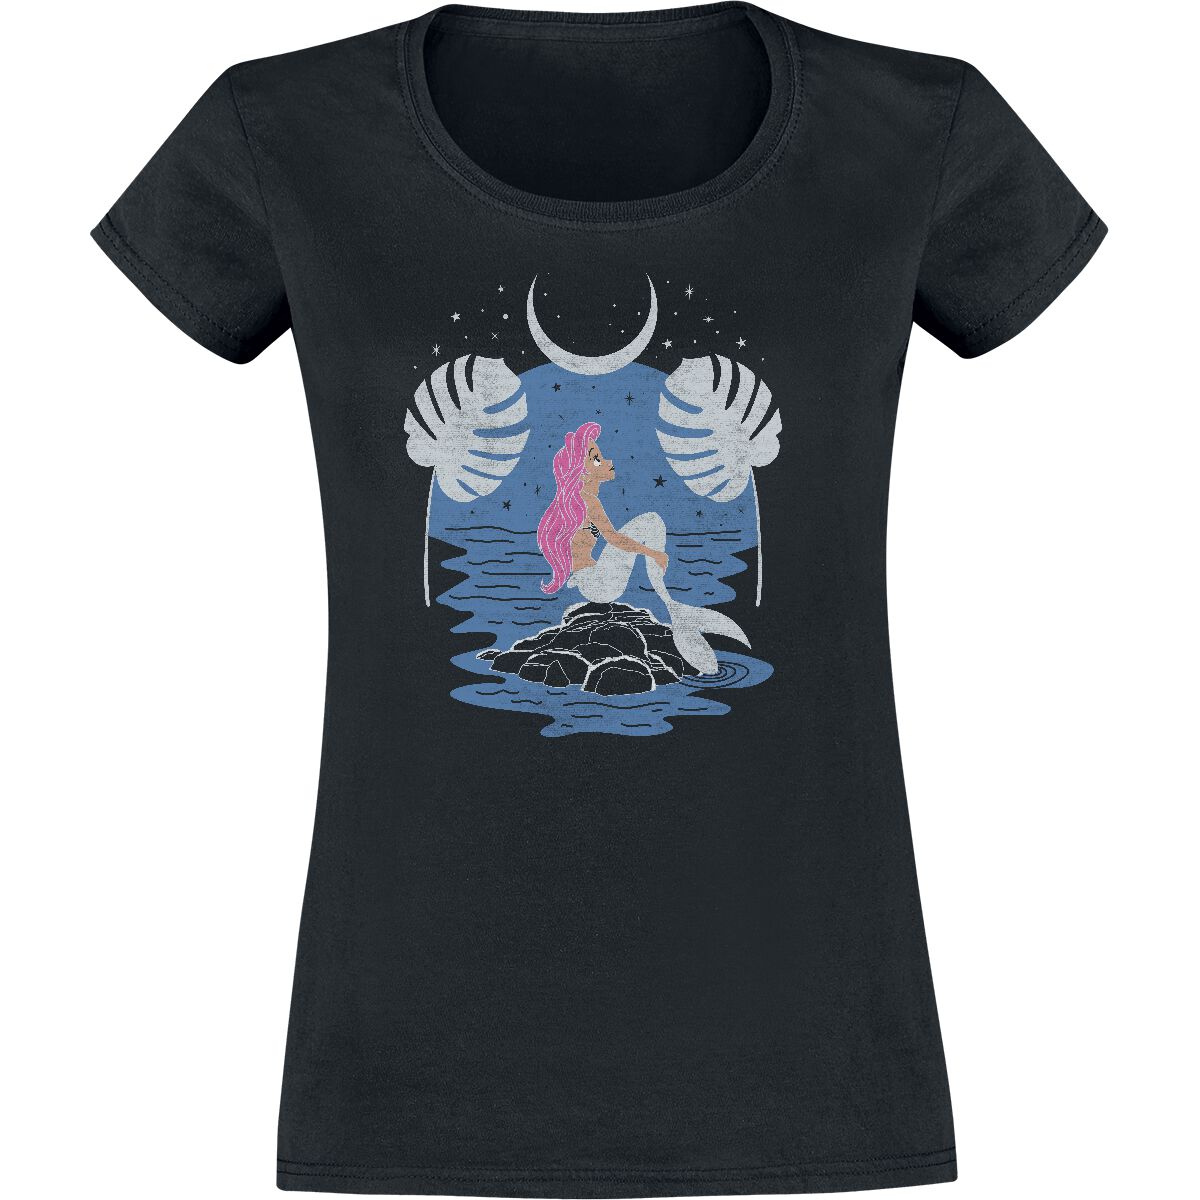 Arielle, die Meerjungfrau Arielle T-Shirt schwarz POD - 859648 8191030